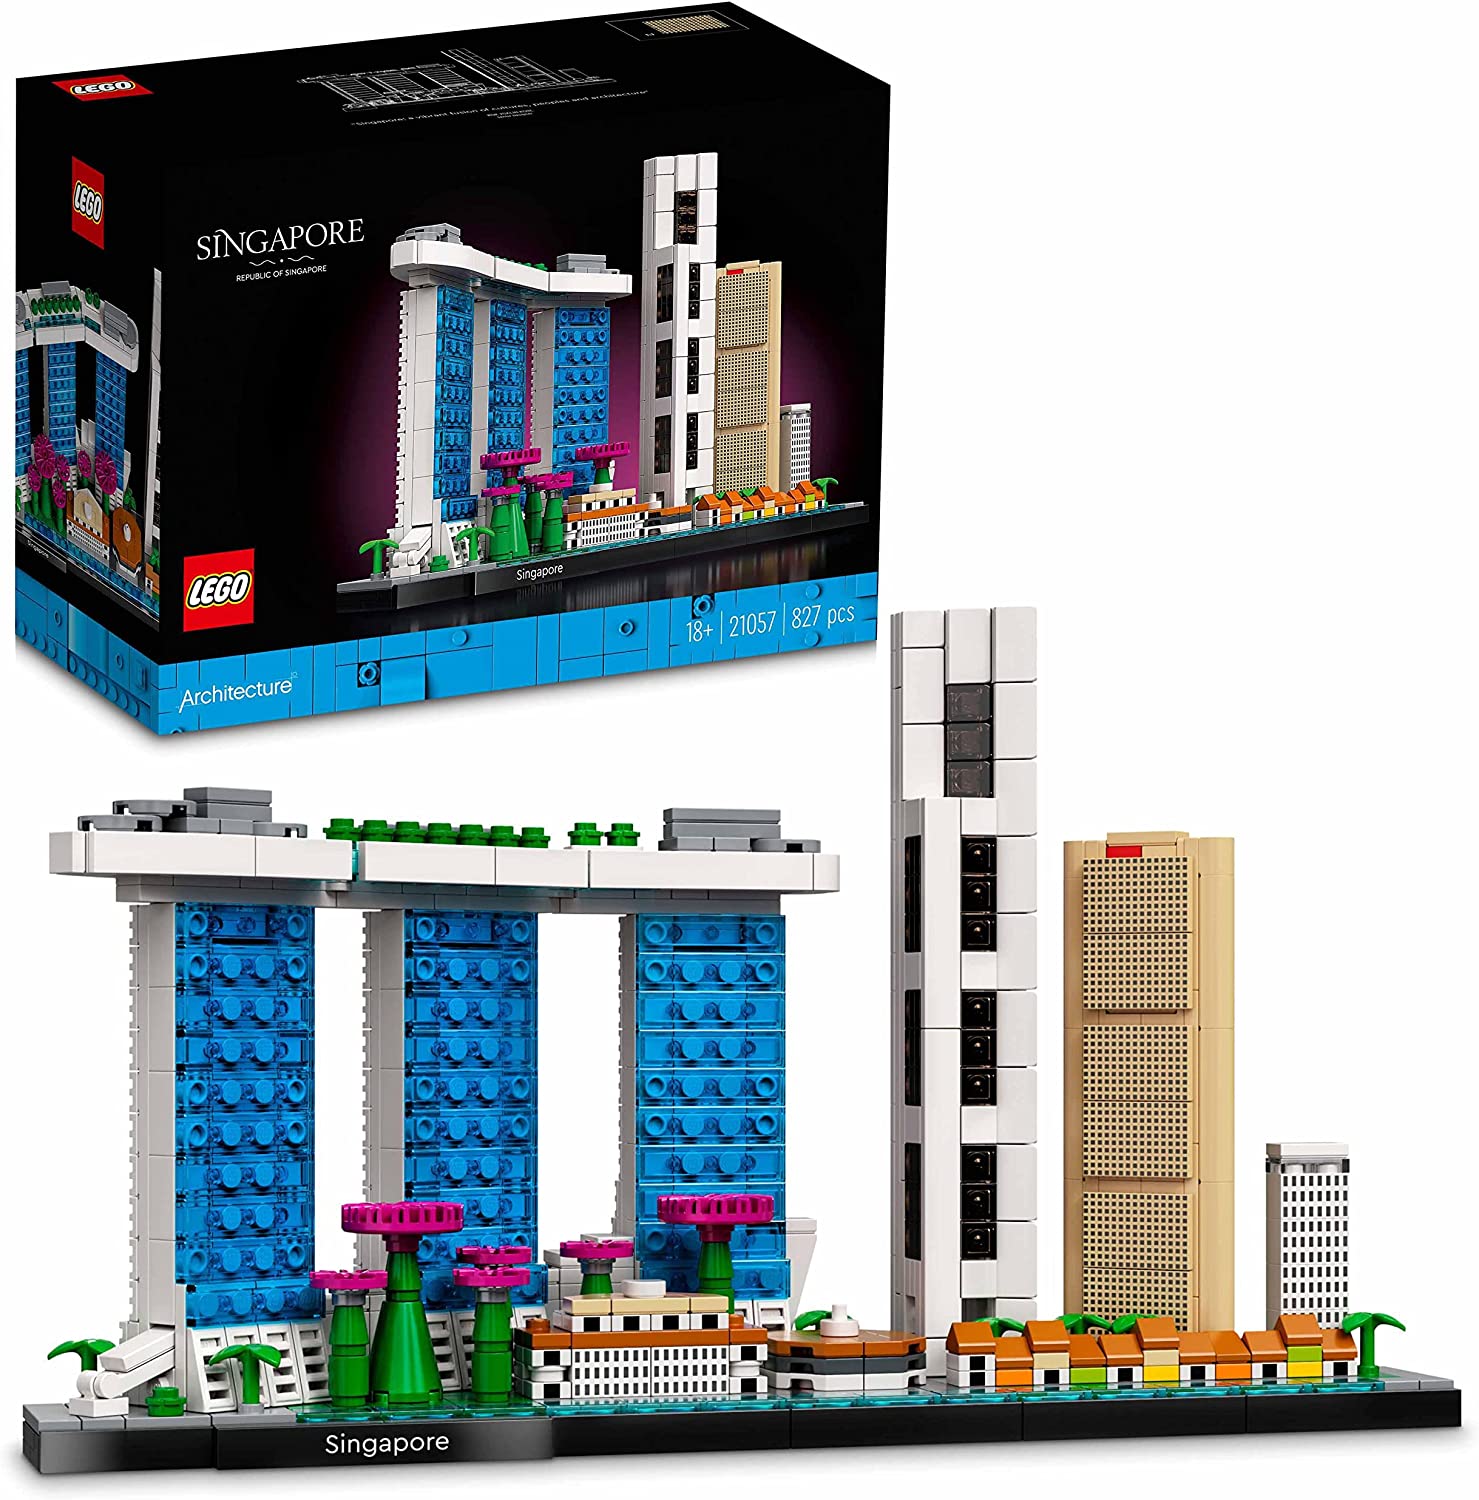 LEGO 21057 SINGAPORE ARCHITECTURE